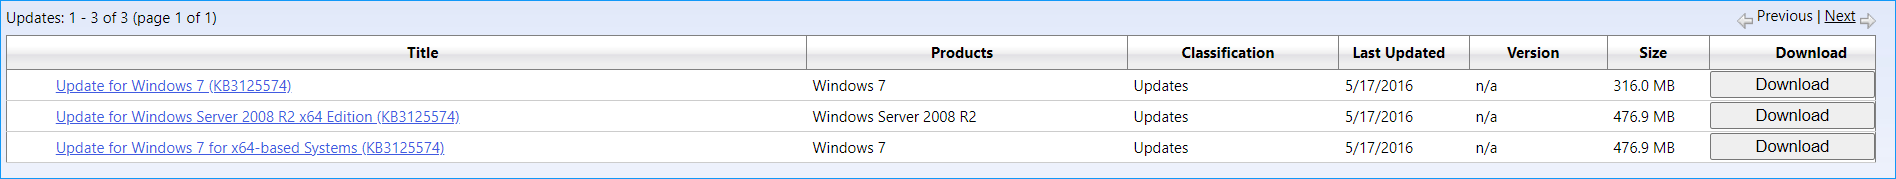 Windows 7 SP1 Convenience Rollup 32 bit download